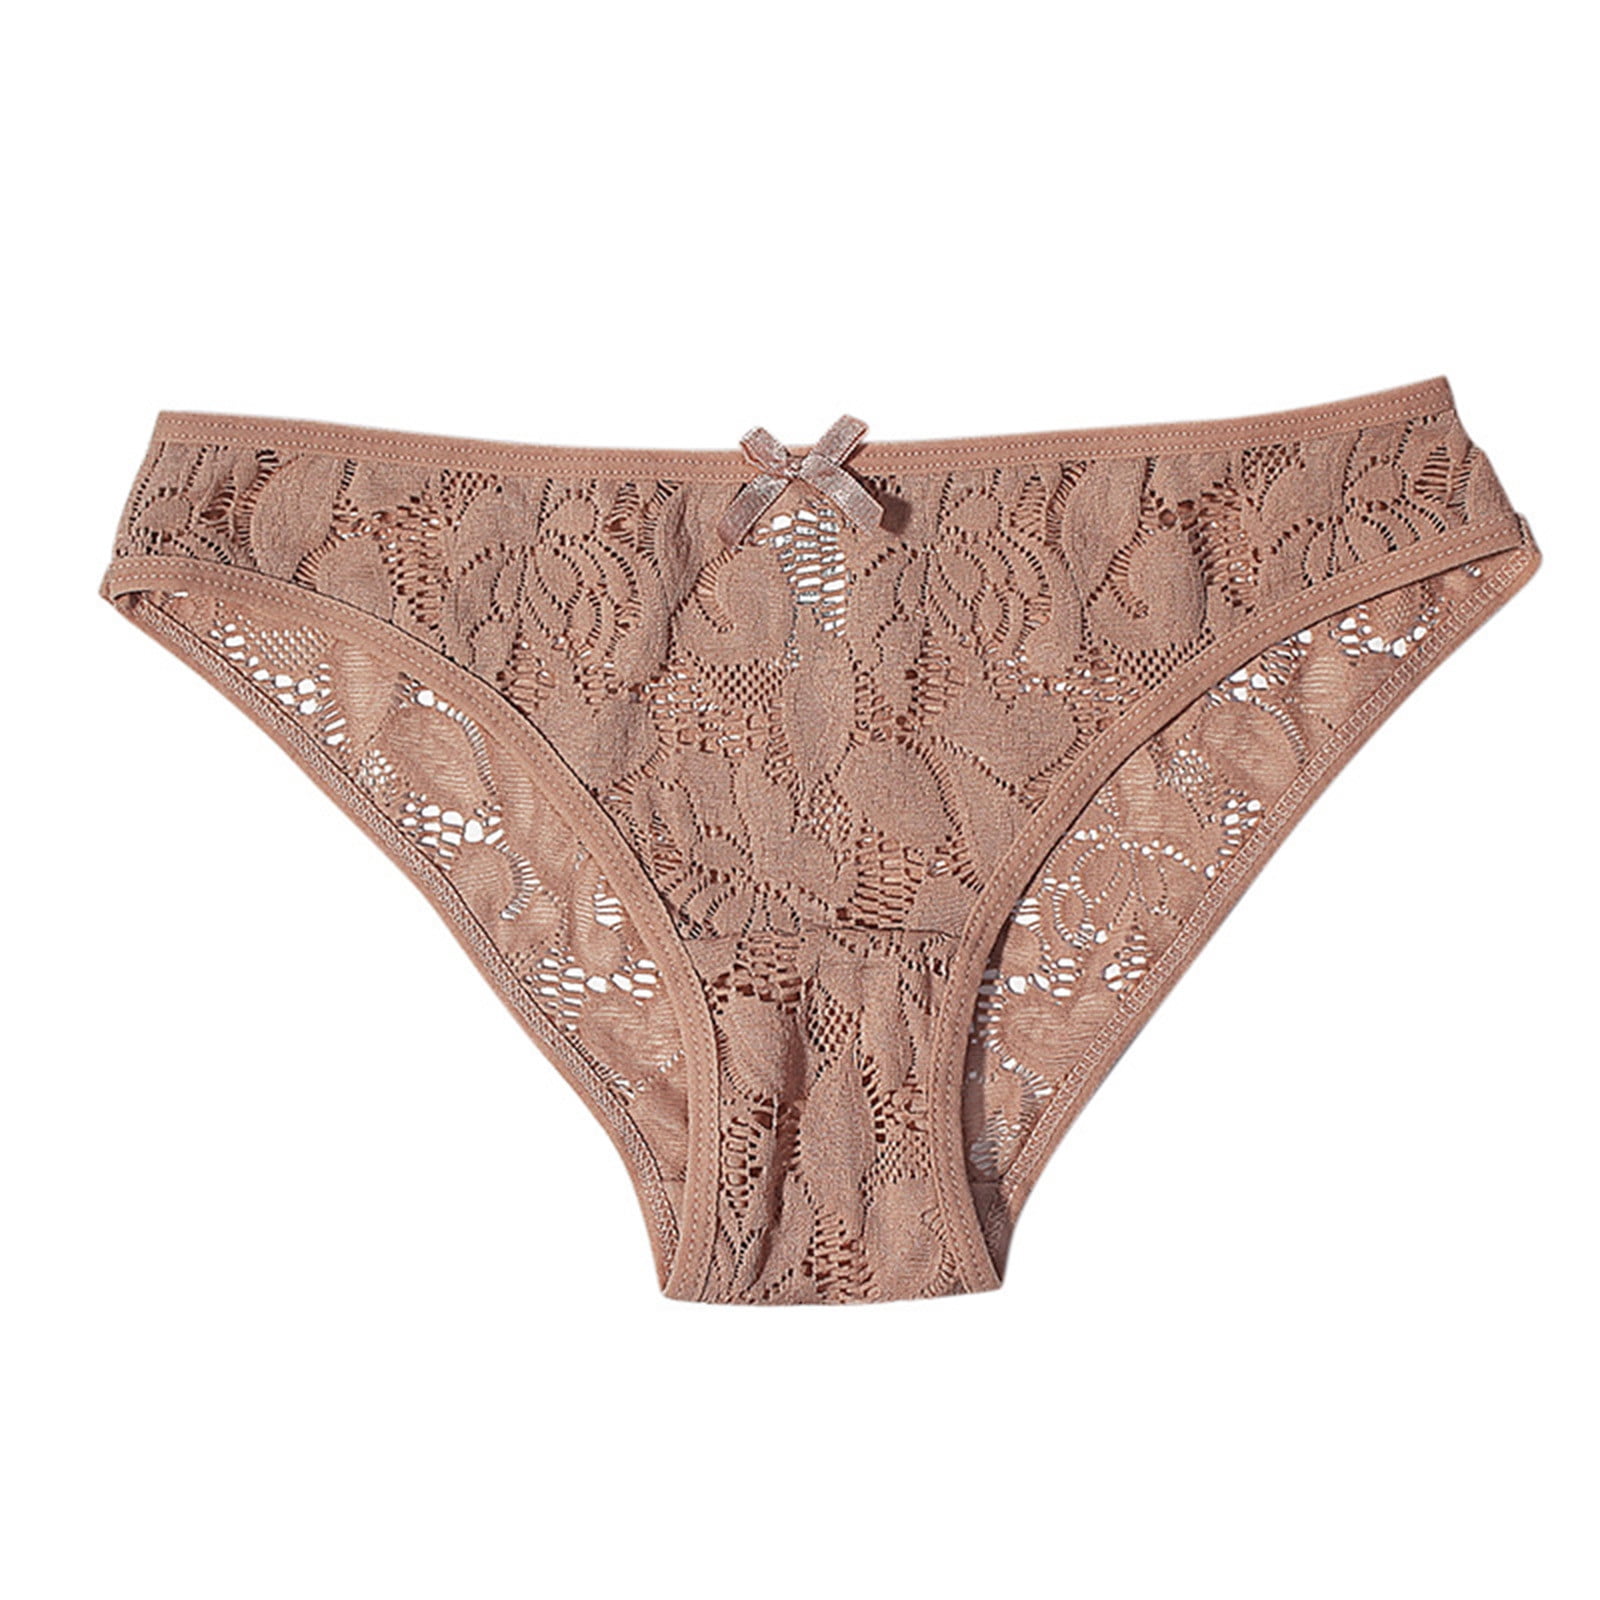 2DXuixsh Seamless Cotton Underwear For Women Bikini Lace